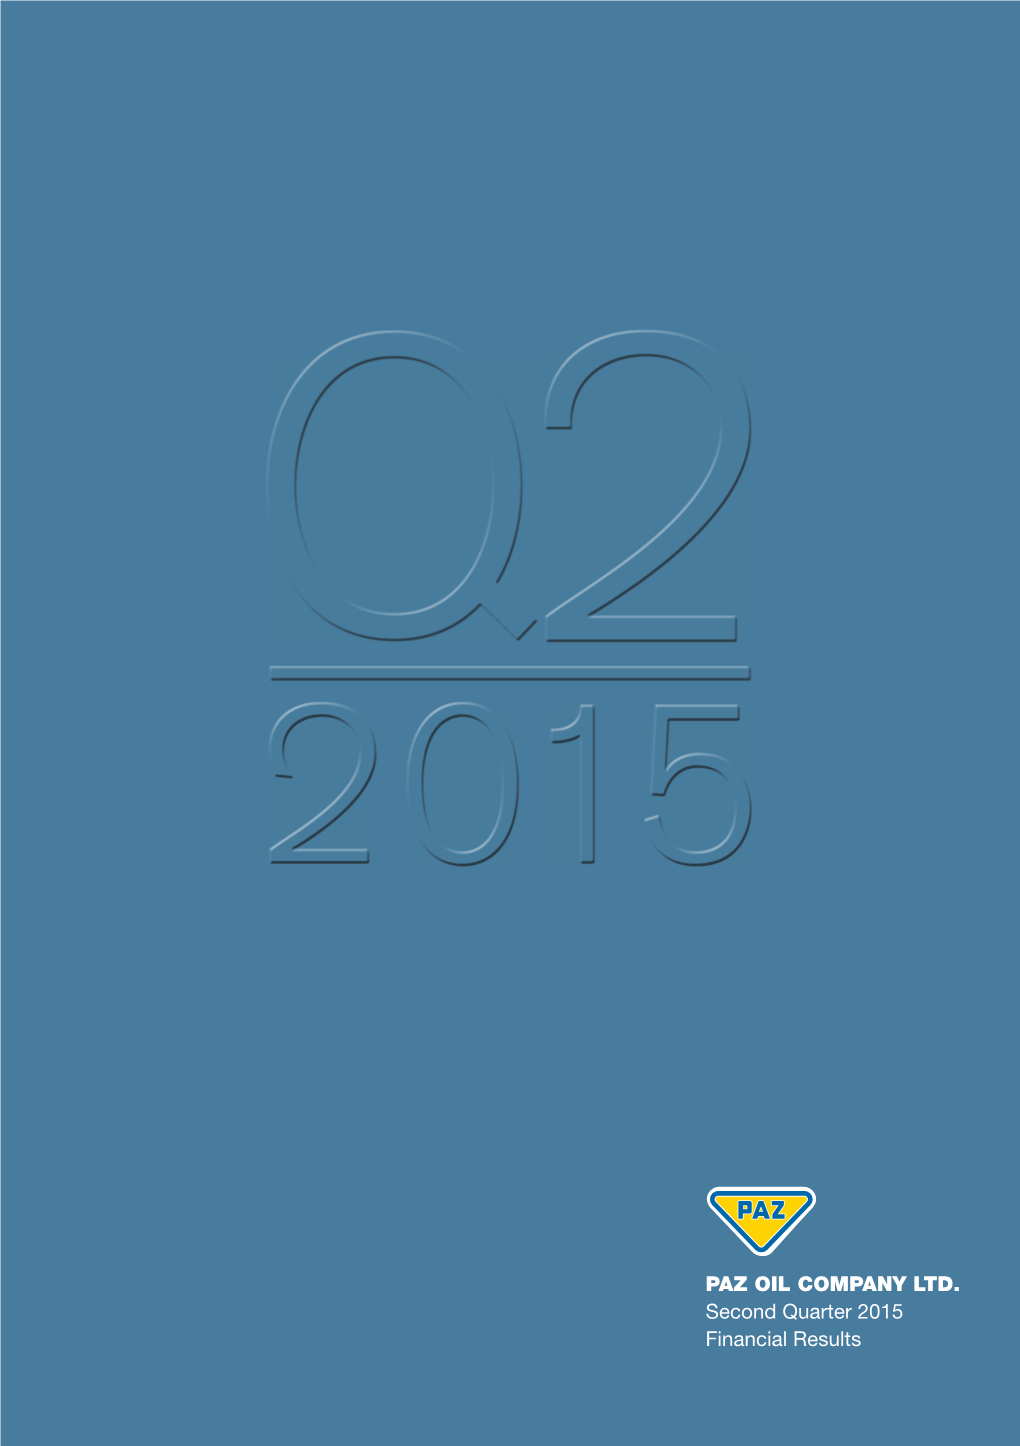 PAZ OIL COMPANY LTD. Second Quarter 2015 Financial Results